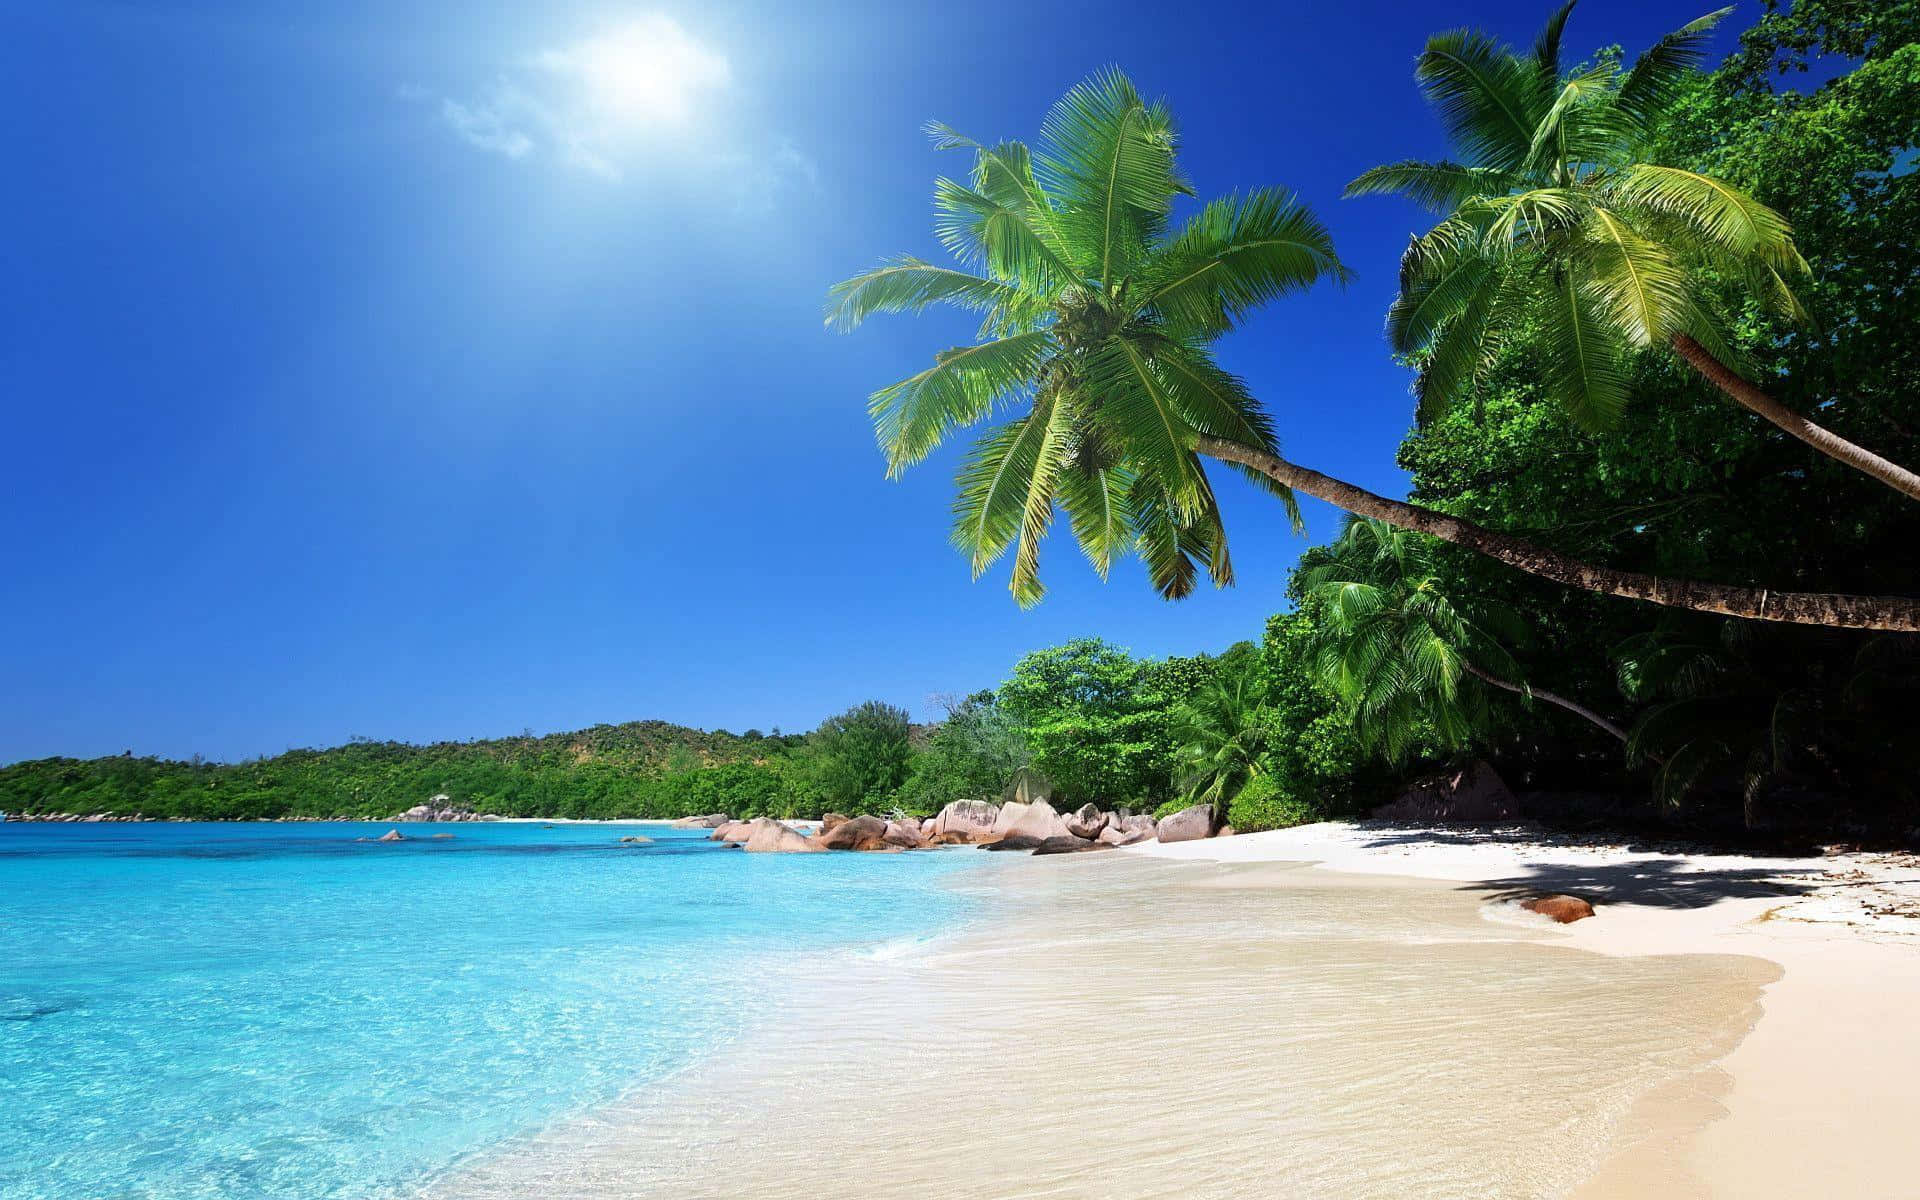 Enjoy the beautiful beach in the Caribbean Wallpaper